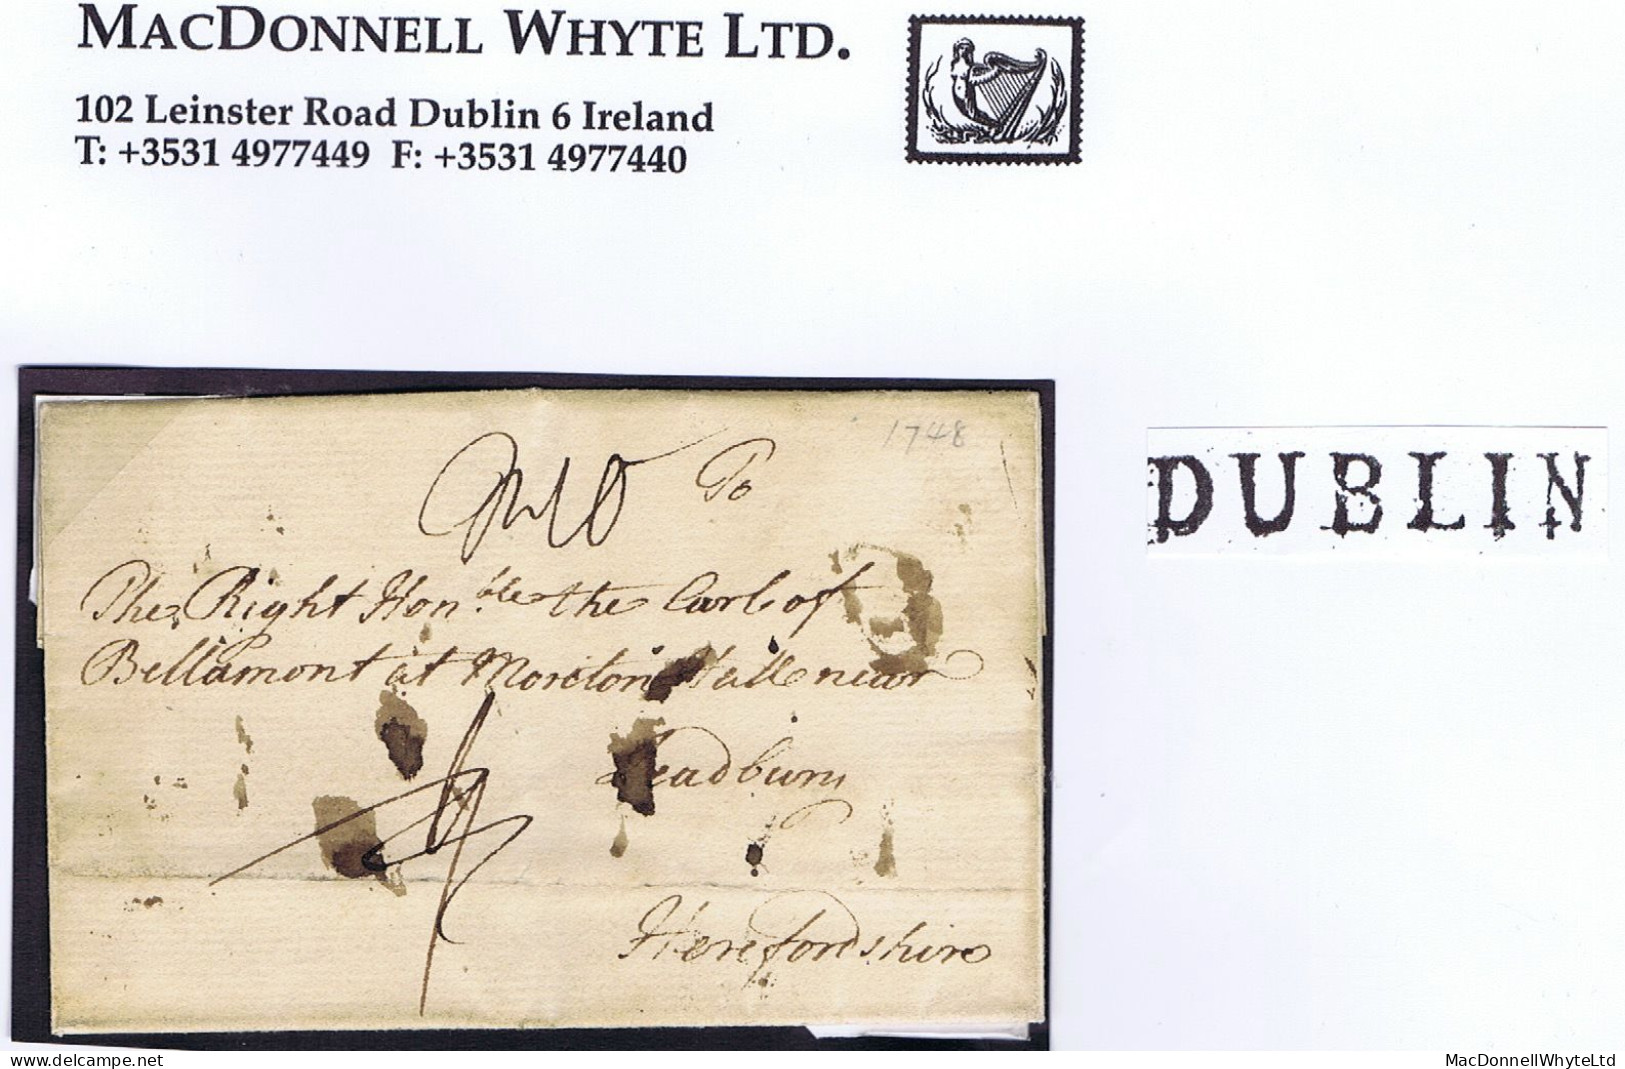 Ireland Dublin 1748 Lettersheet To Leadbury With The Medium 27mm DUBLIN In Black, Rerated To "1n10" - Prefilatelia